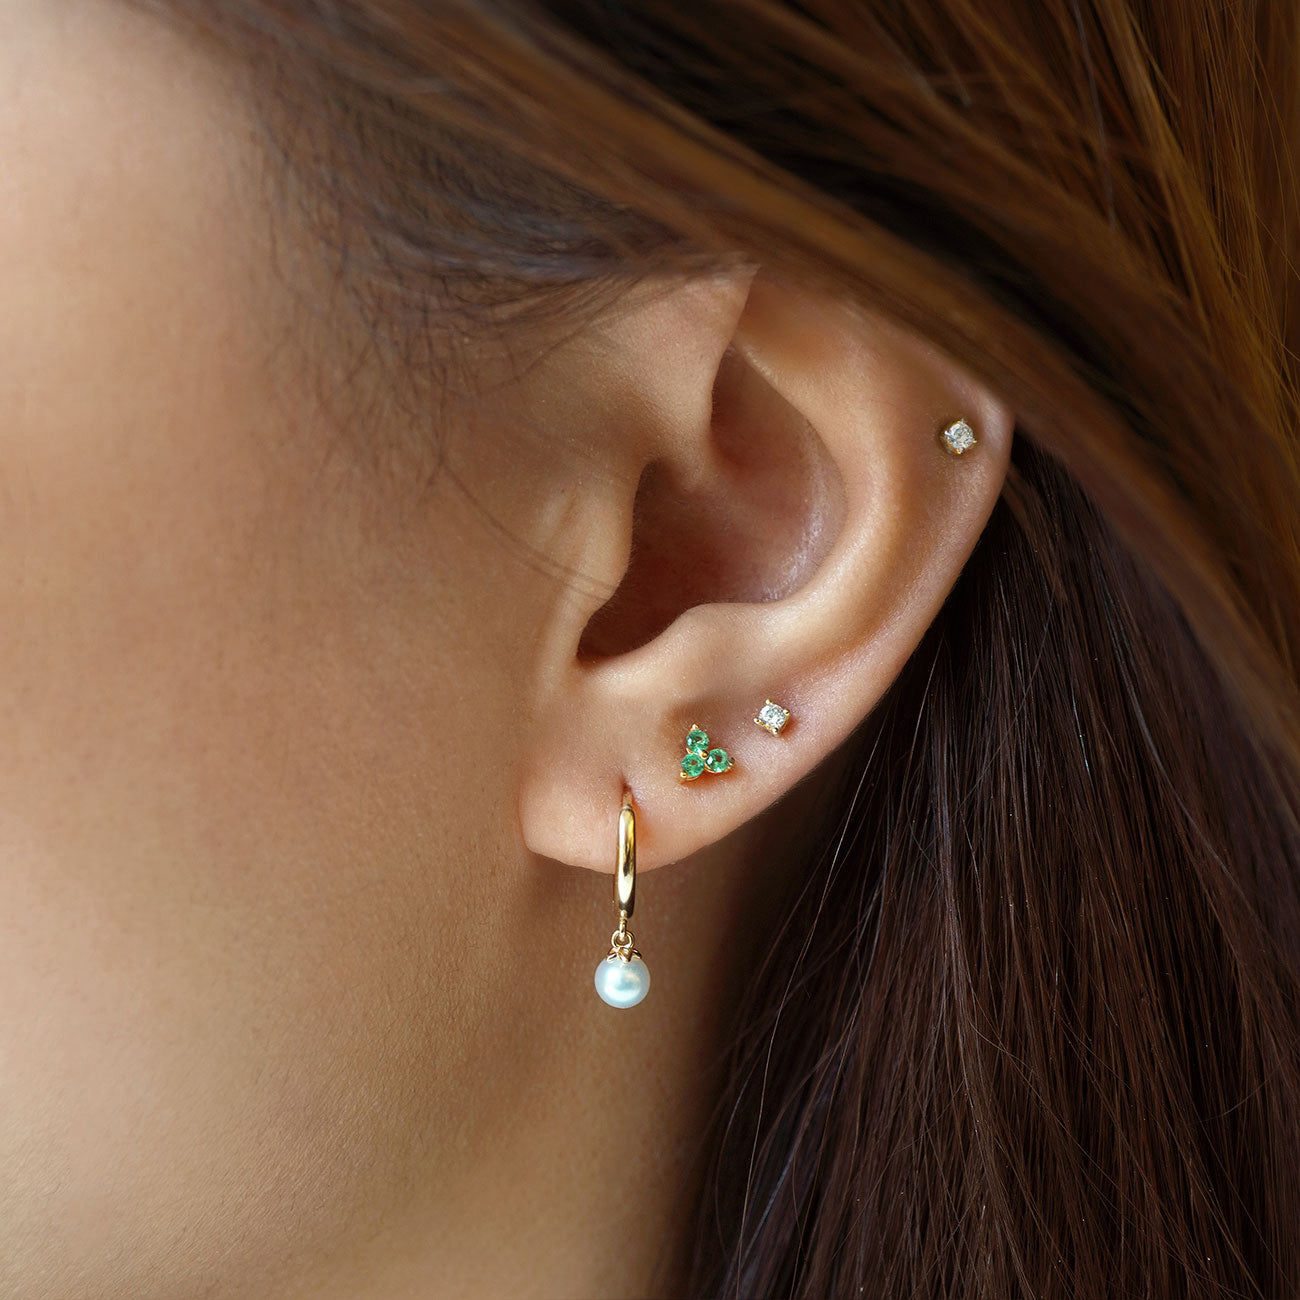 #39;VERA#39; diamond cuff earring